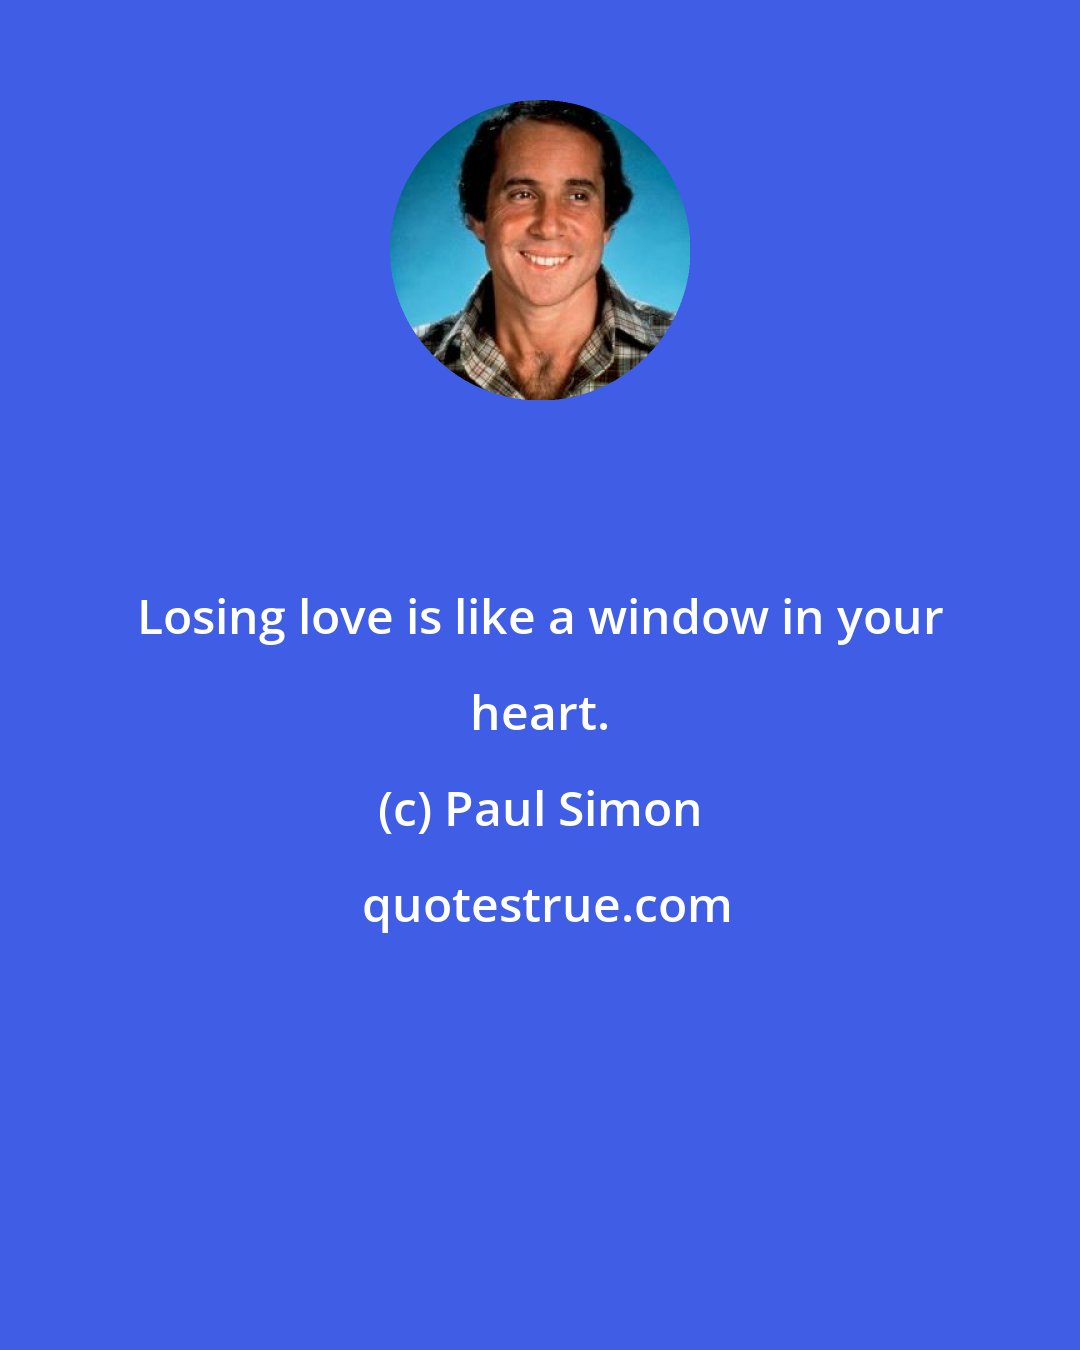 Paul Simon: Losing love is like a window in your heart.